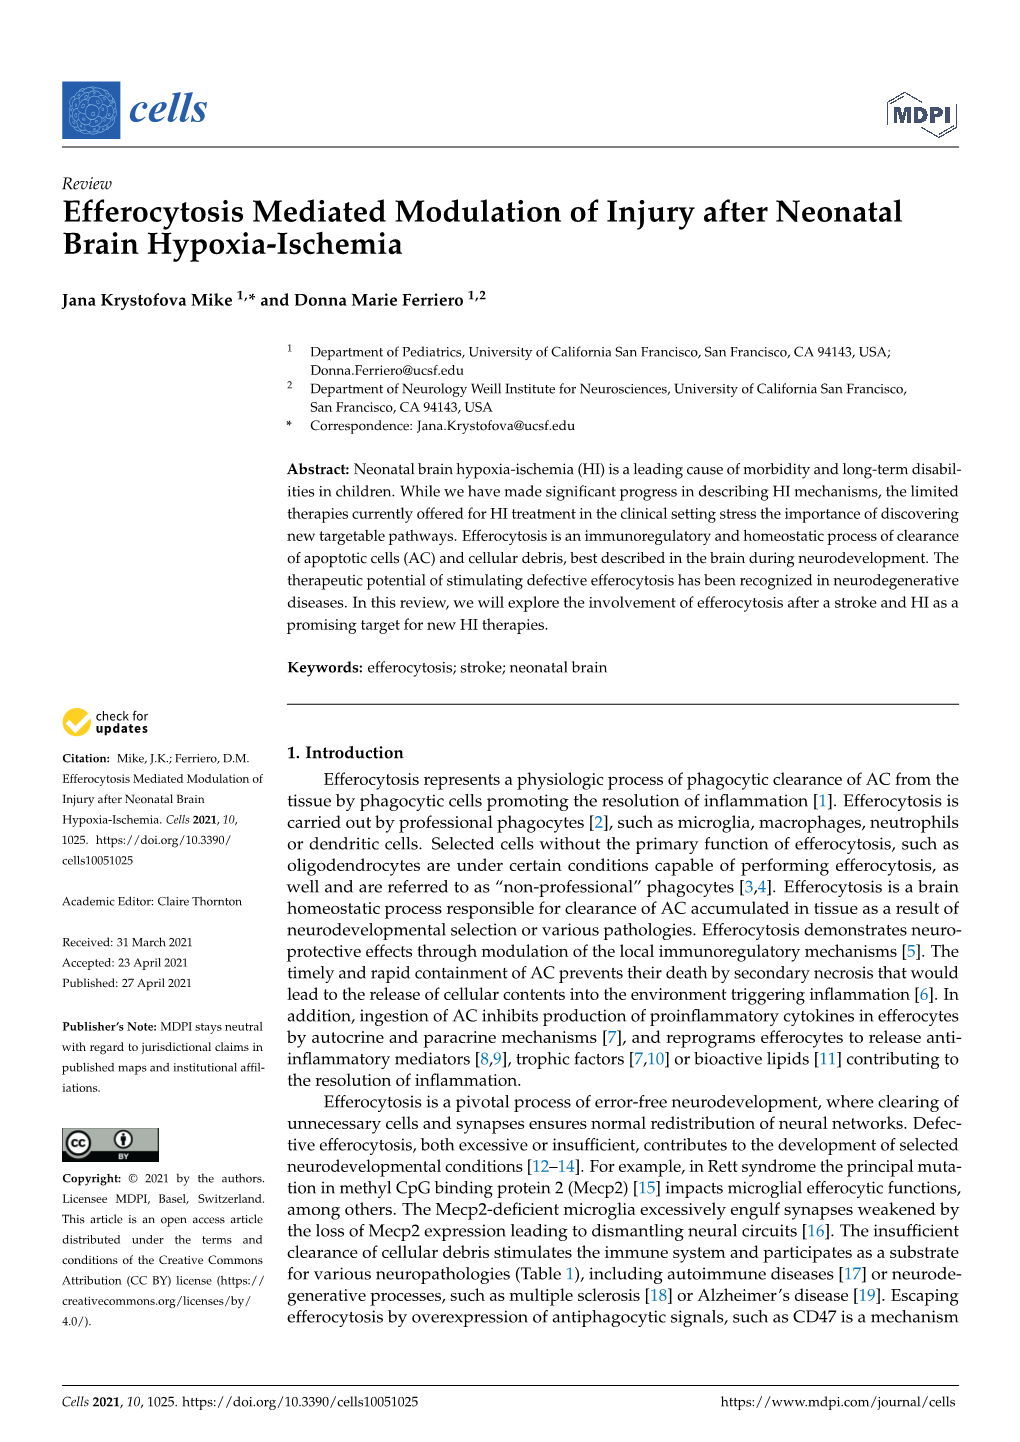 Efferocytosis Mediated Modulation of Injury After Neonatal Brain Hypoxia-Ischemia